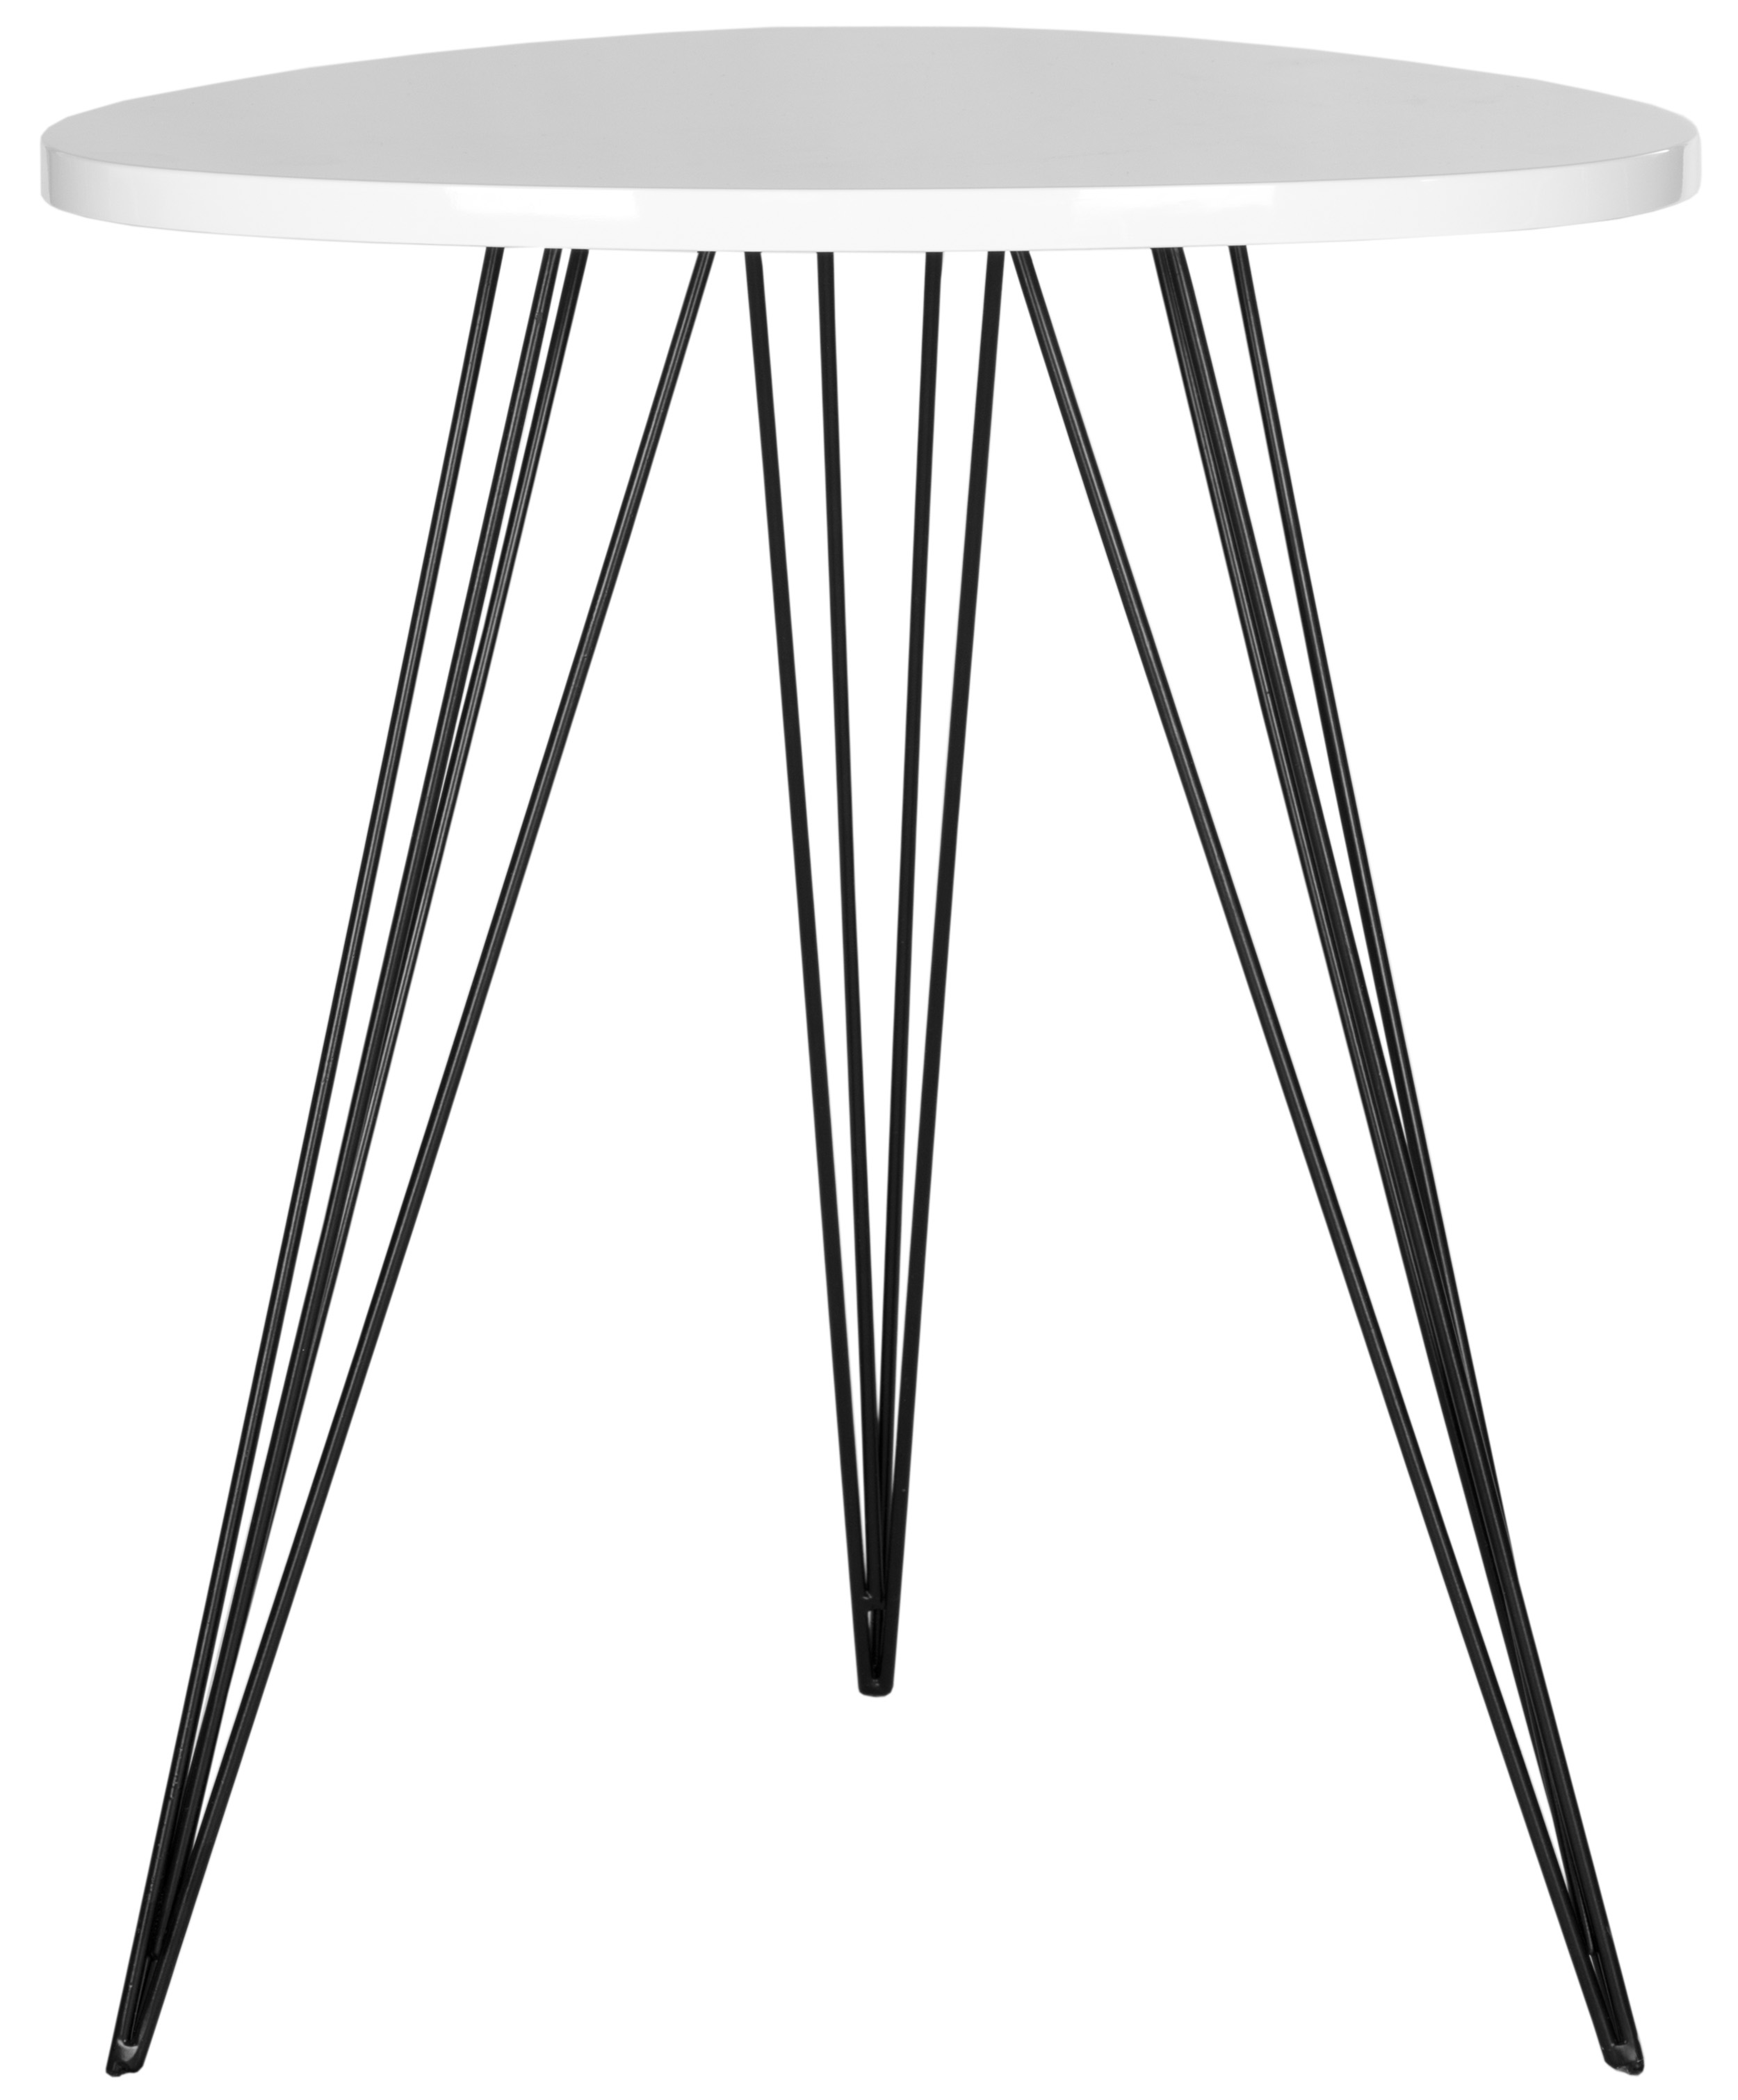 Wolcott Retro Mid Century Lacquer Side Table - White/Black - Arlo Home - Arlo Home